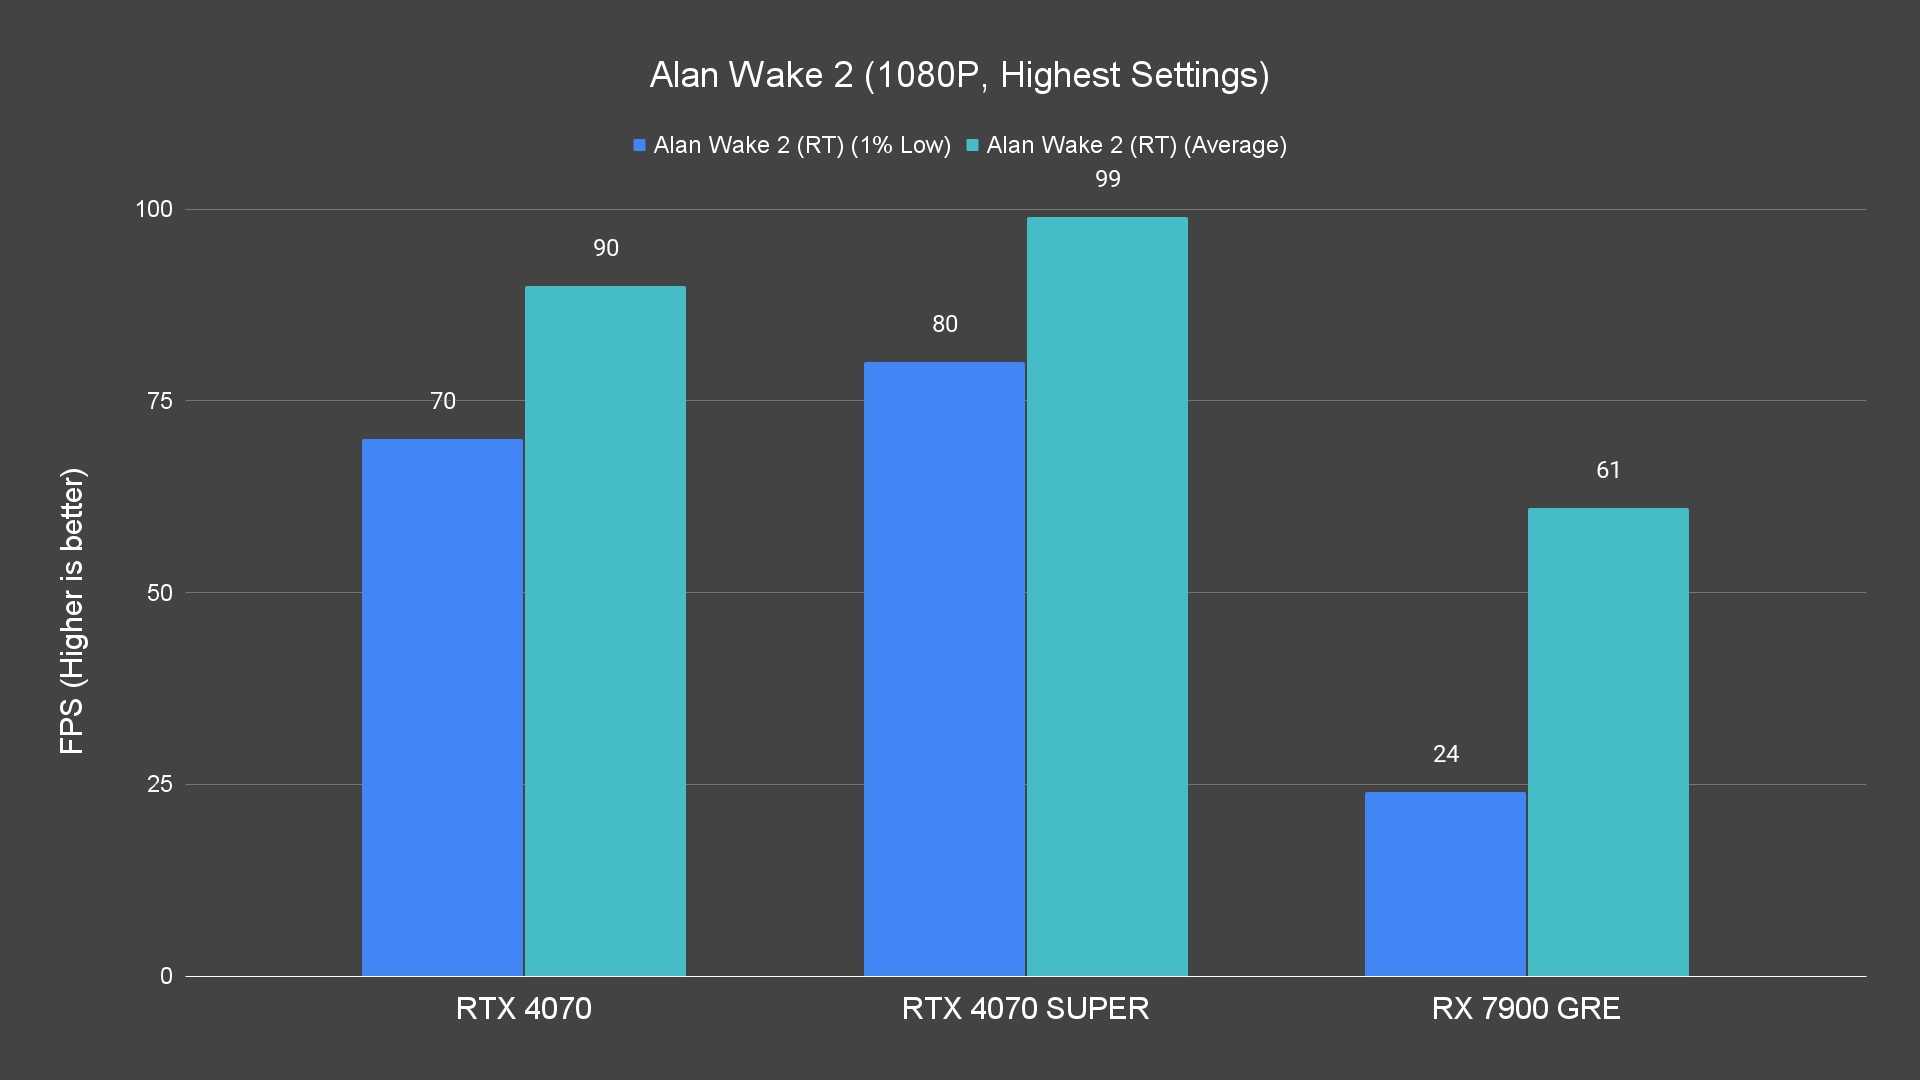 Alan Wake 2 (1080P, Highest Settings) (1)